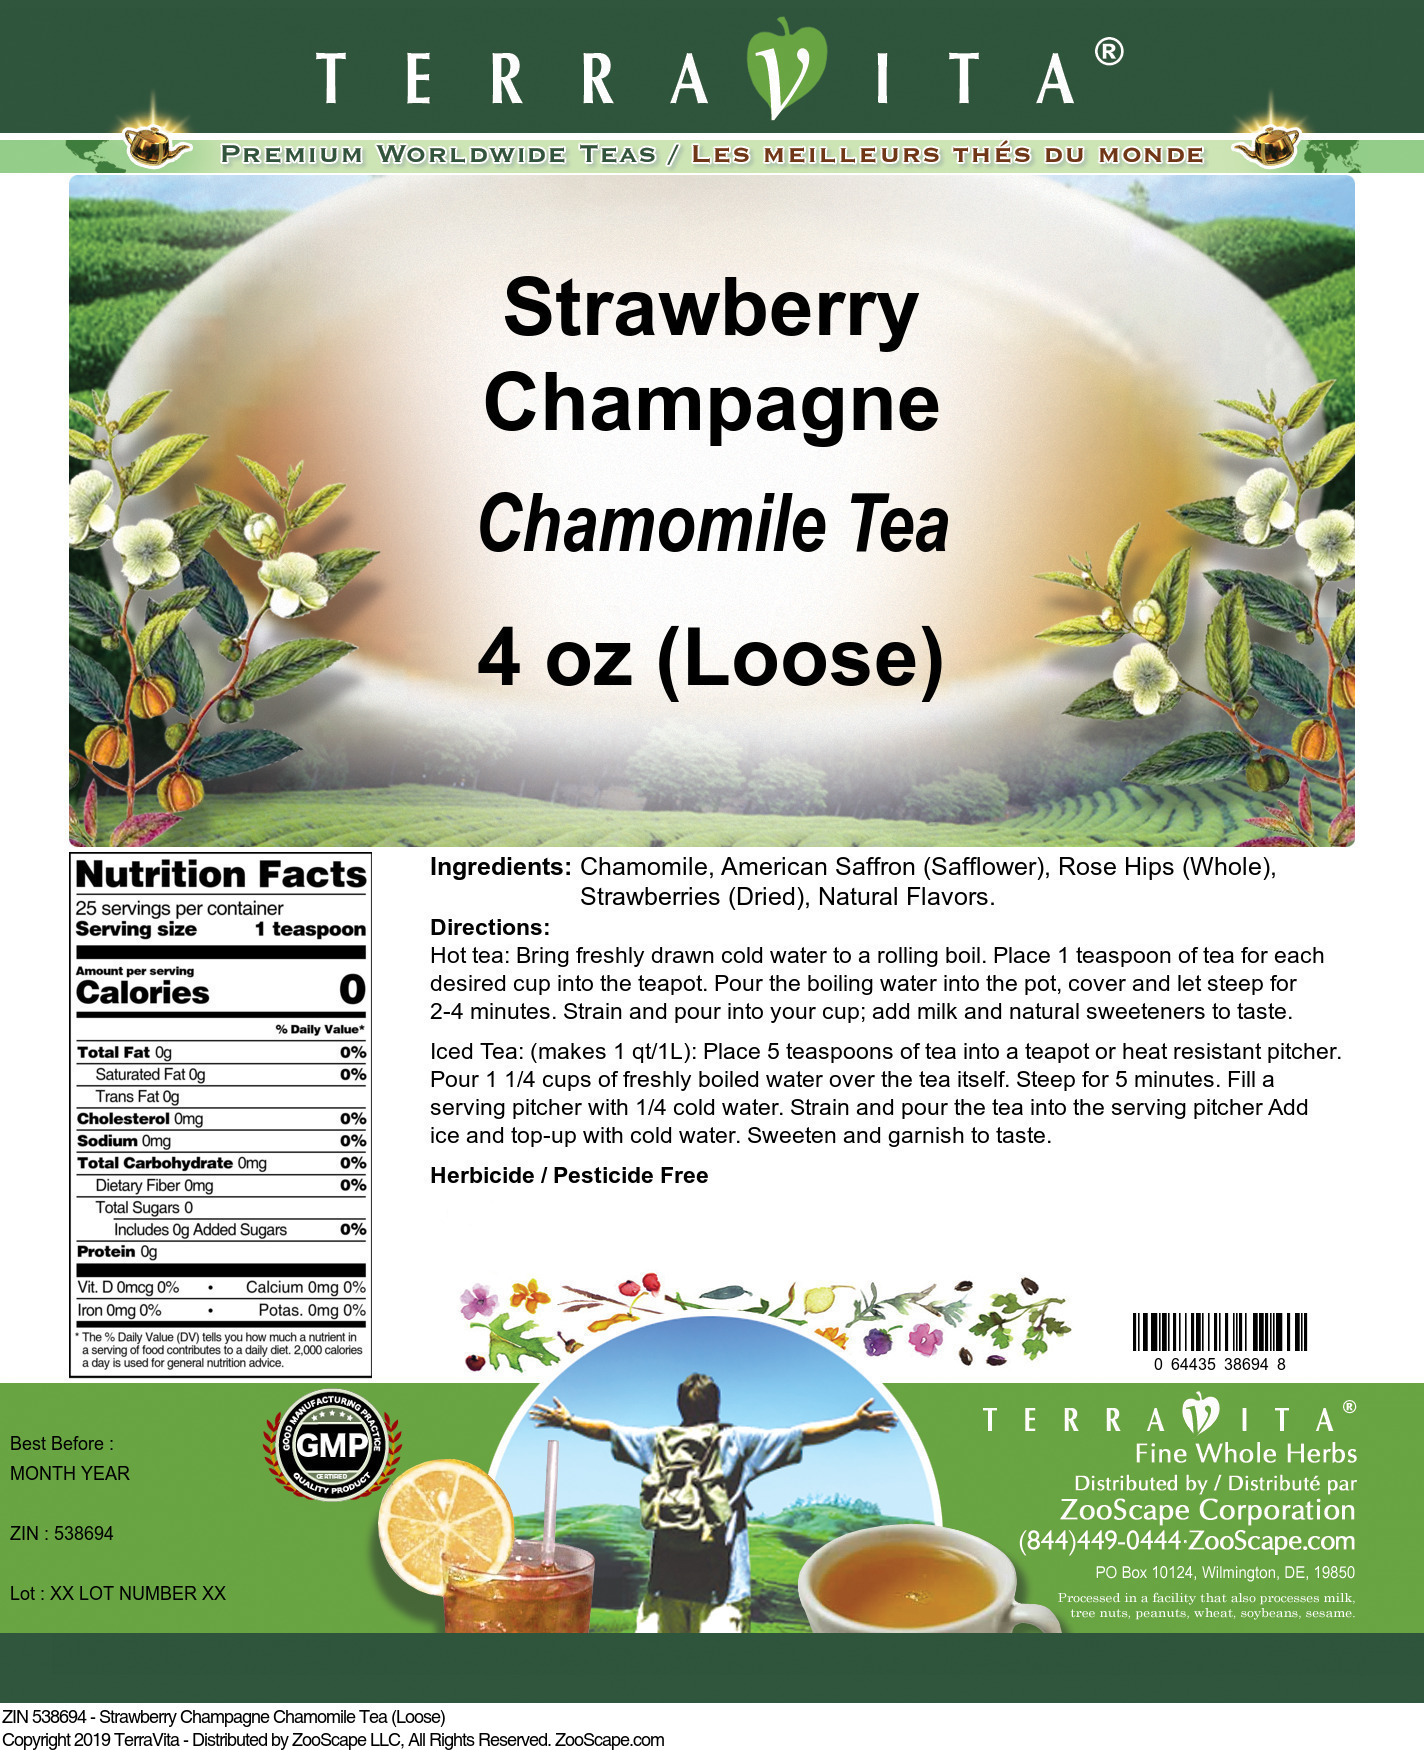 Strawberry Champagne Chamomile Tea (Loose) - Label